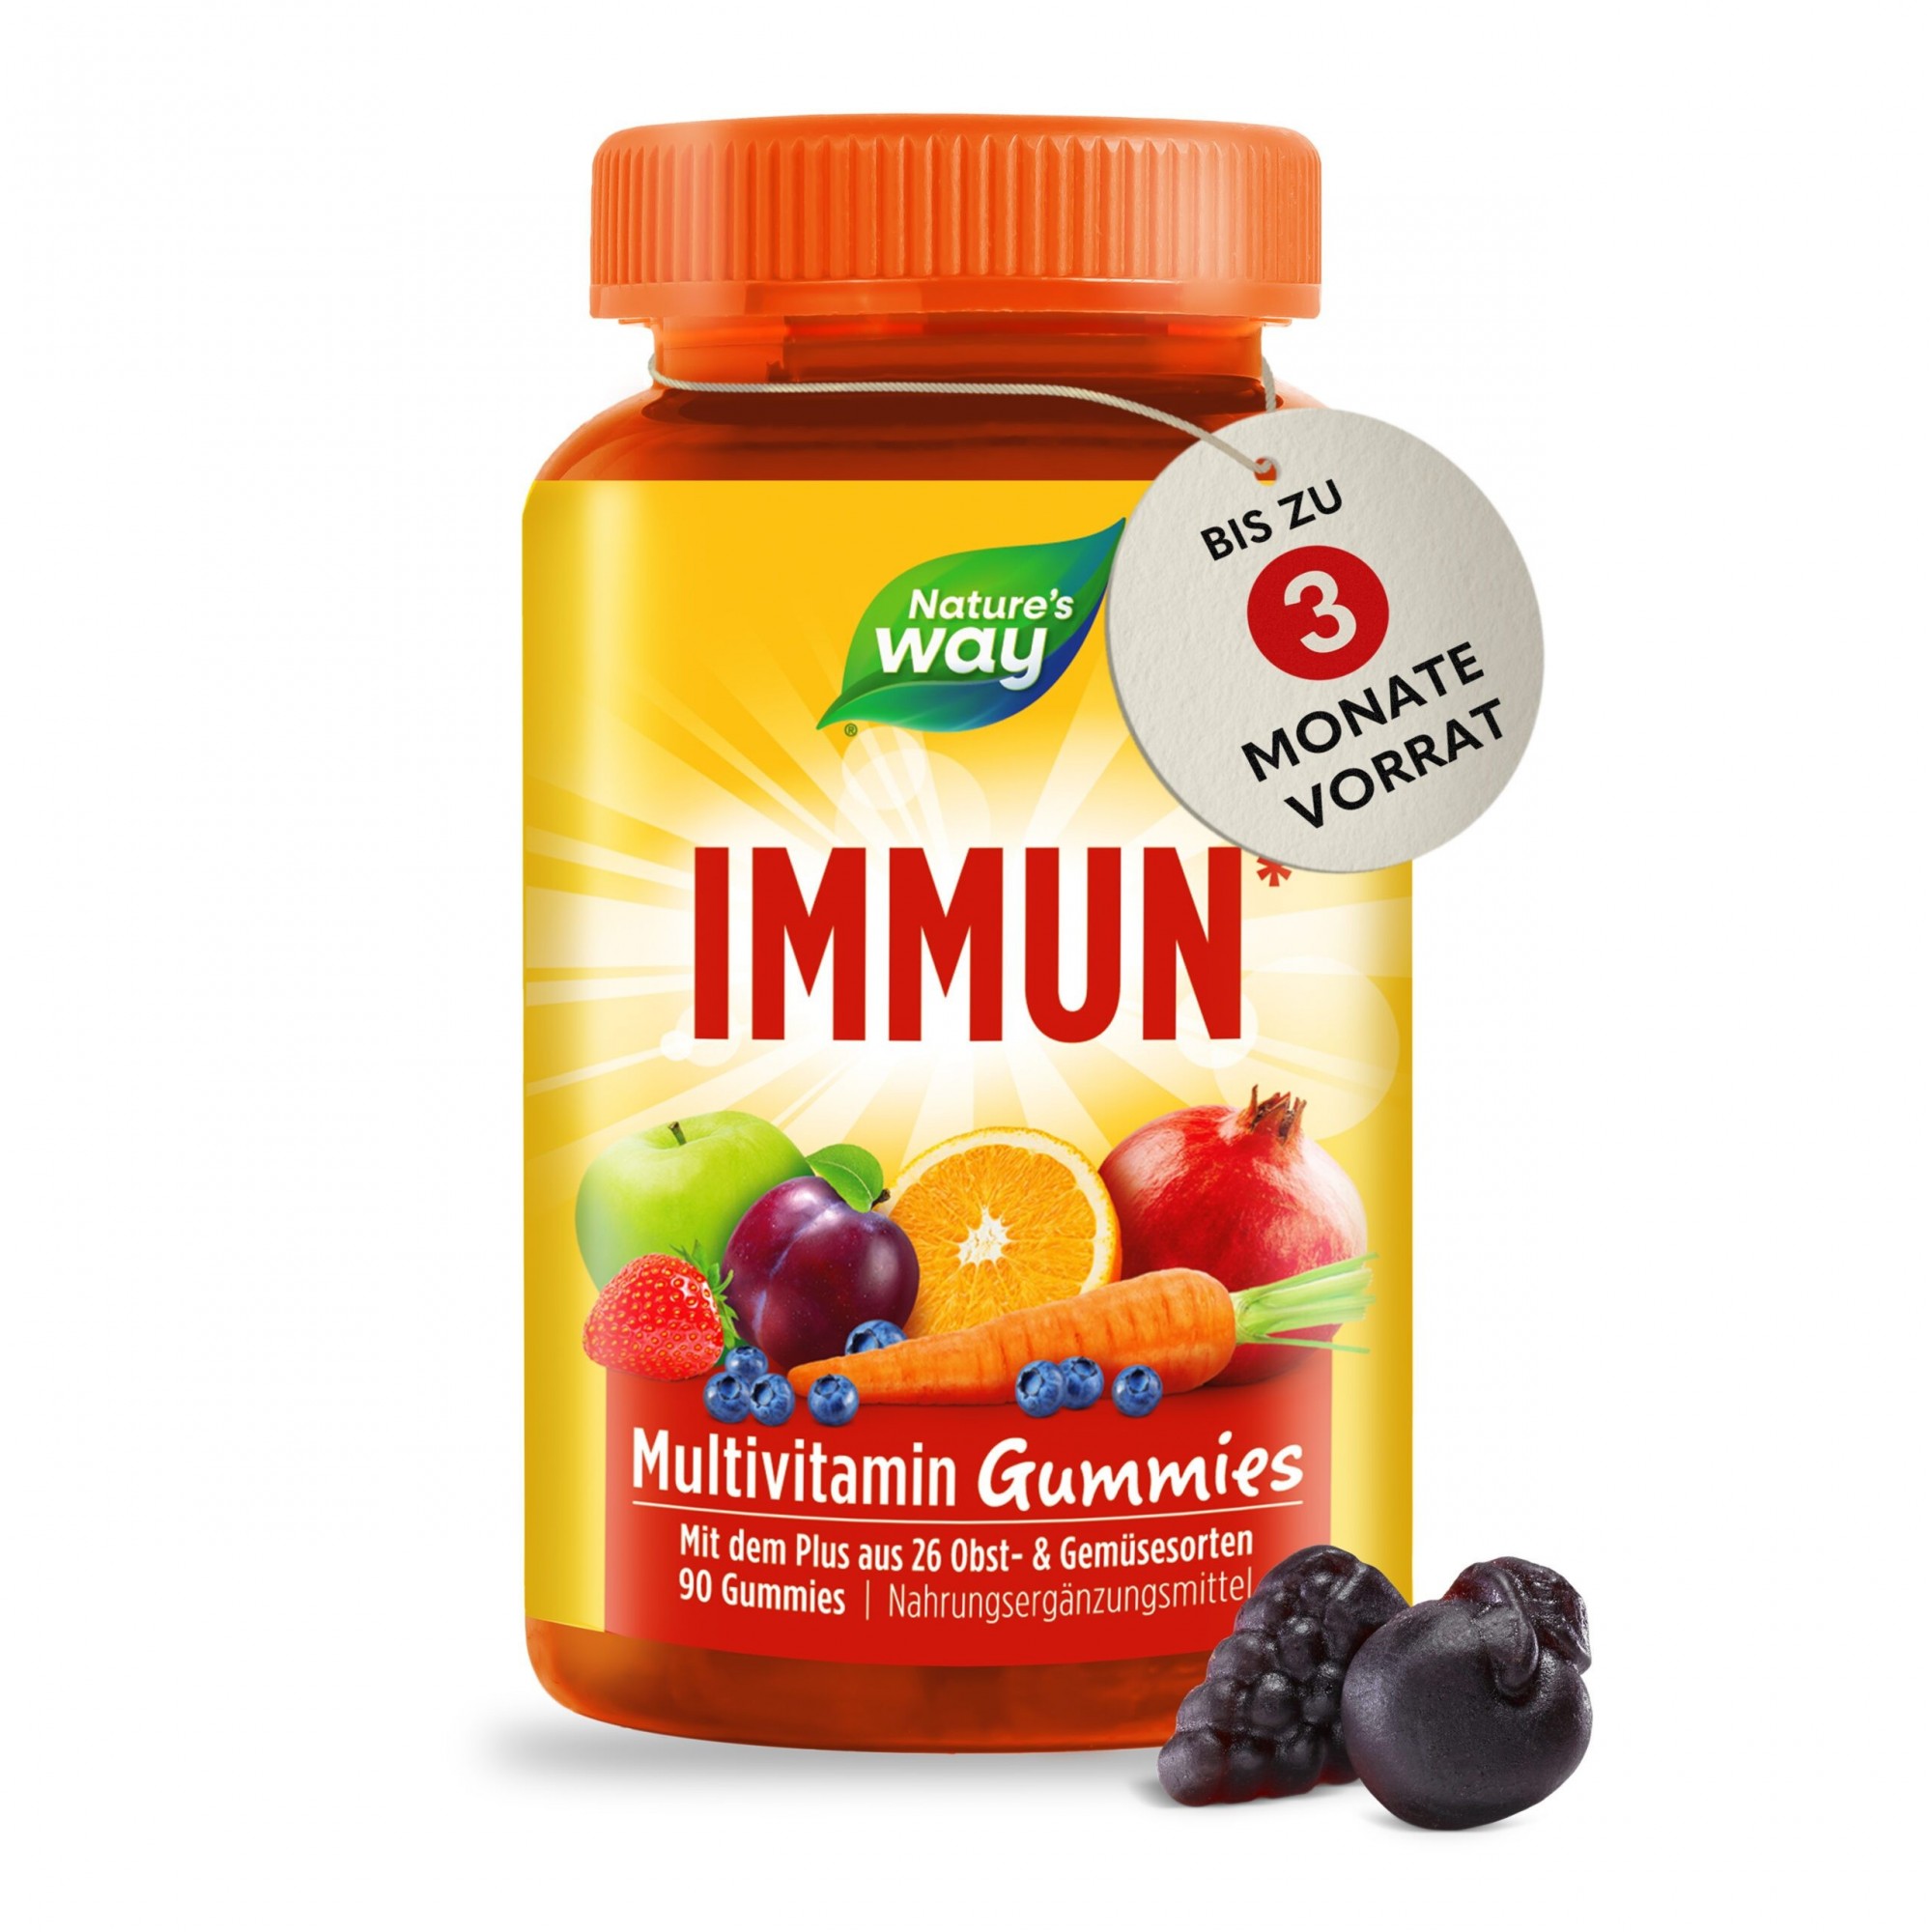 Immun Multivitamin Gummies